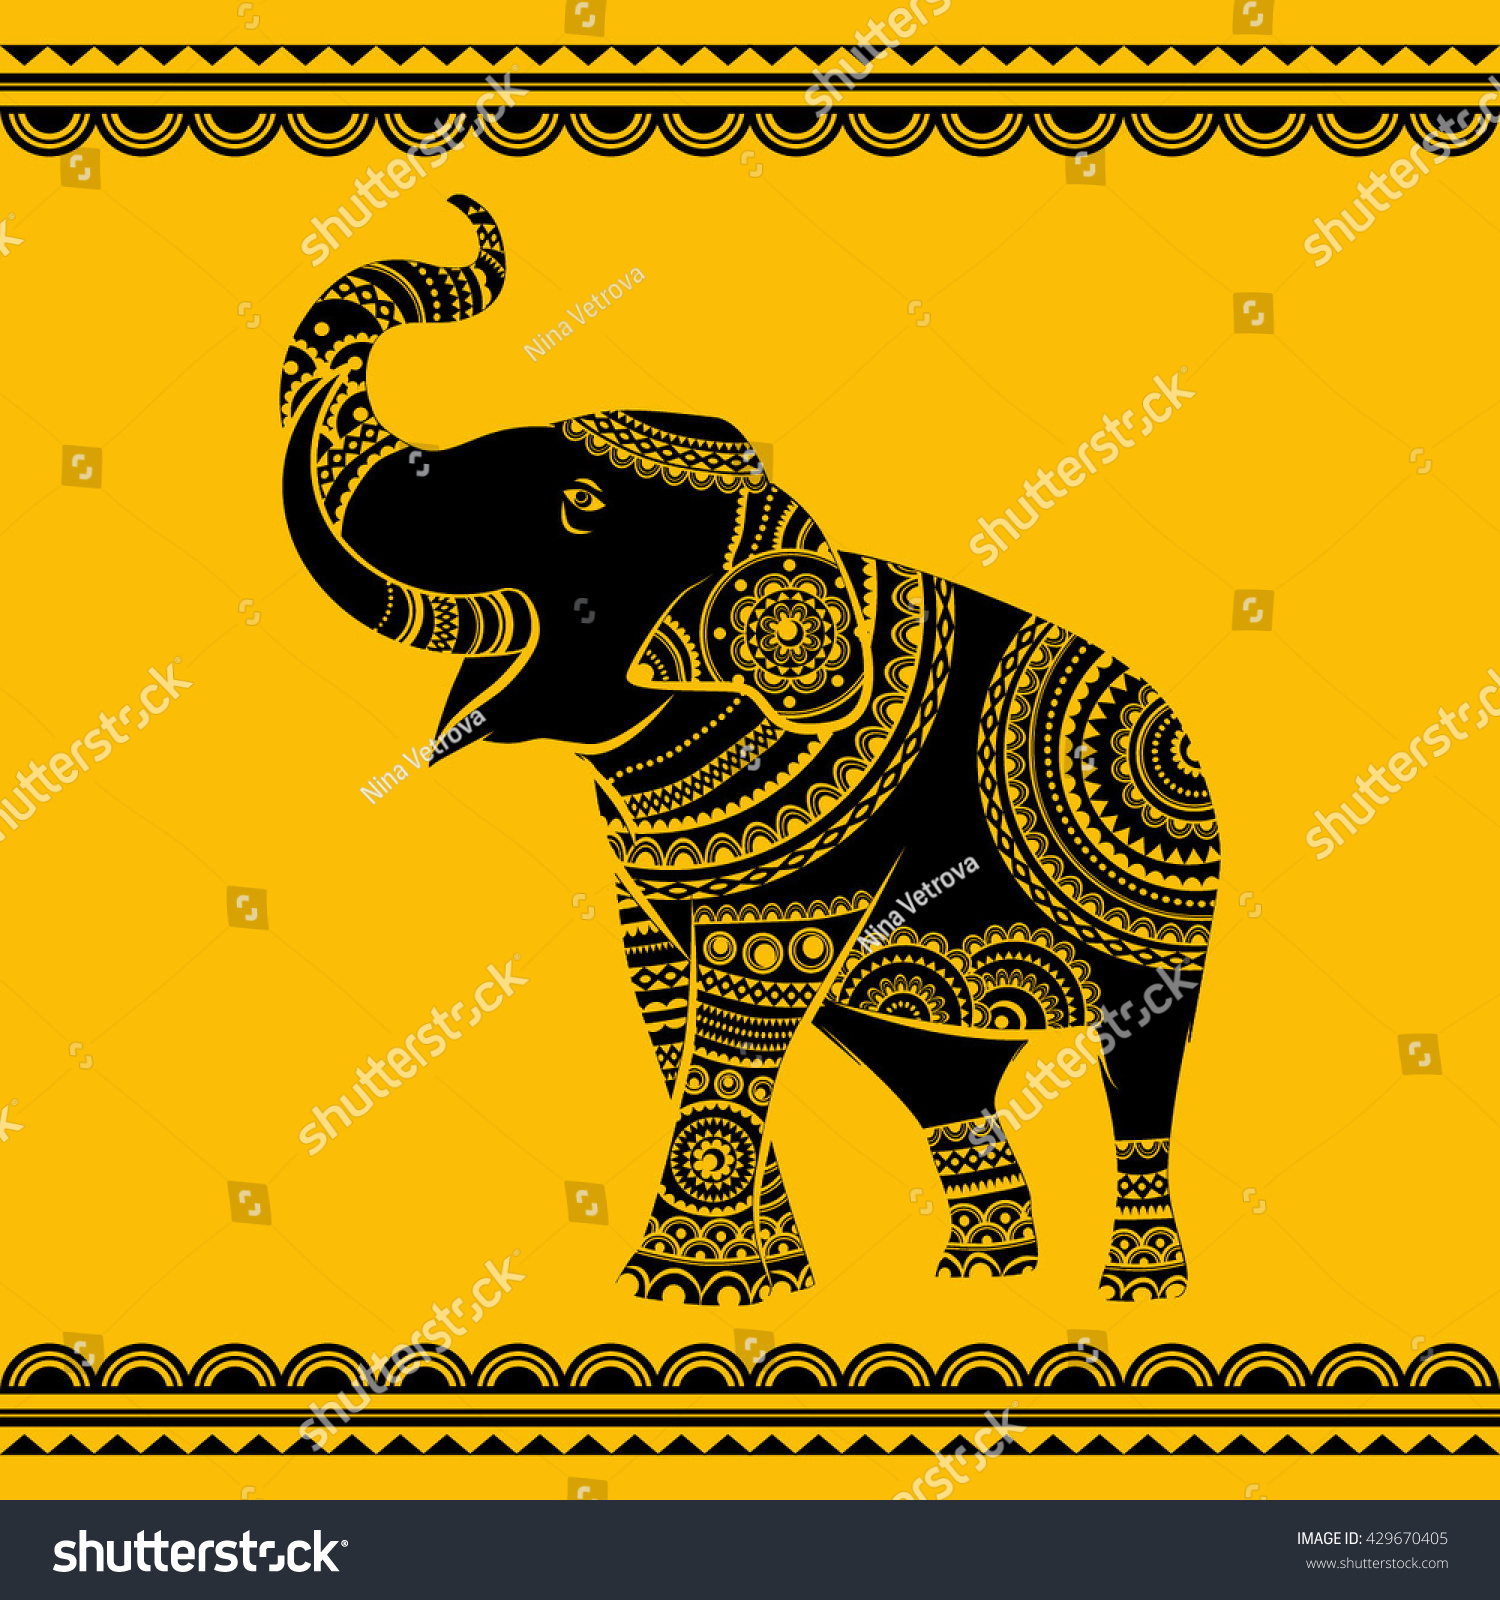 SVG of Hand drawn ornate elephant. Isolated vector illustration. Ideal ethnic background, tattoo, yoga, African, Indian,Thai, spirituality, boho design. svg